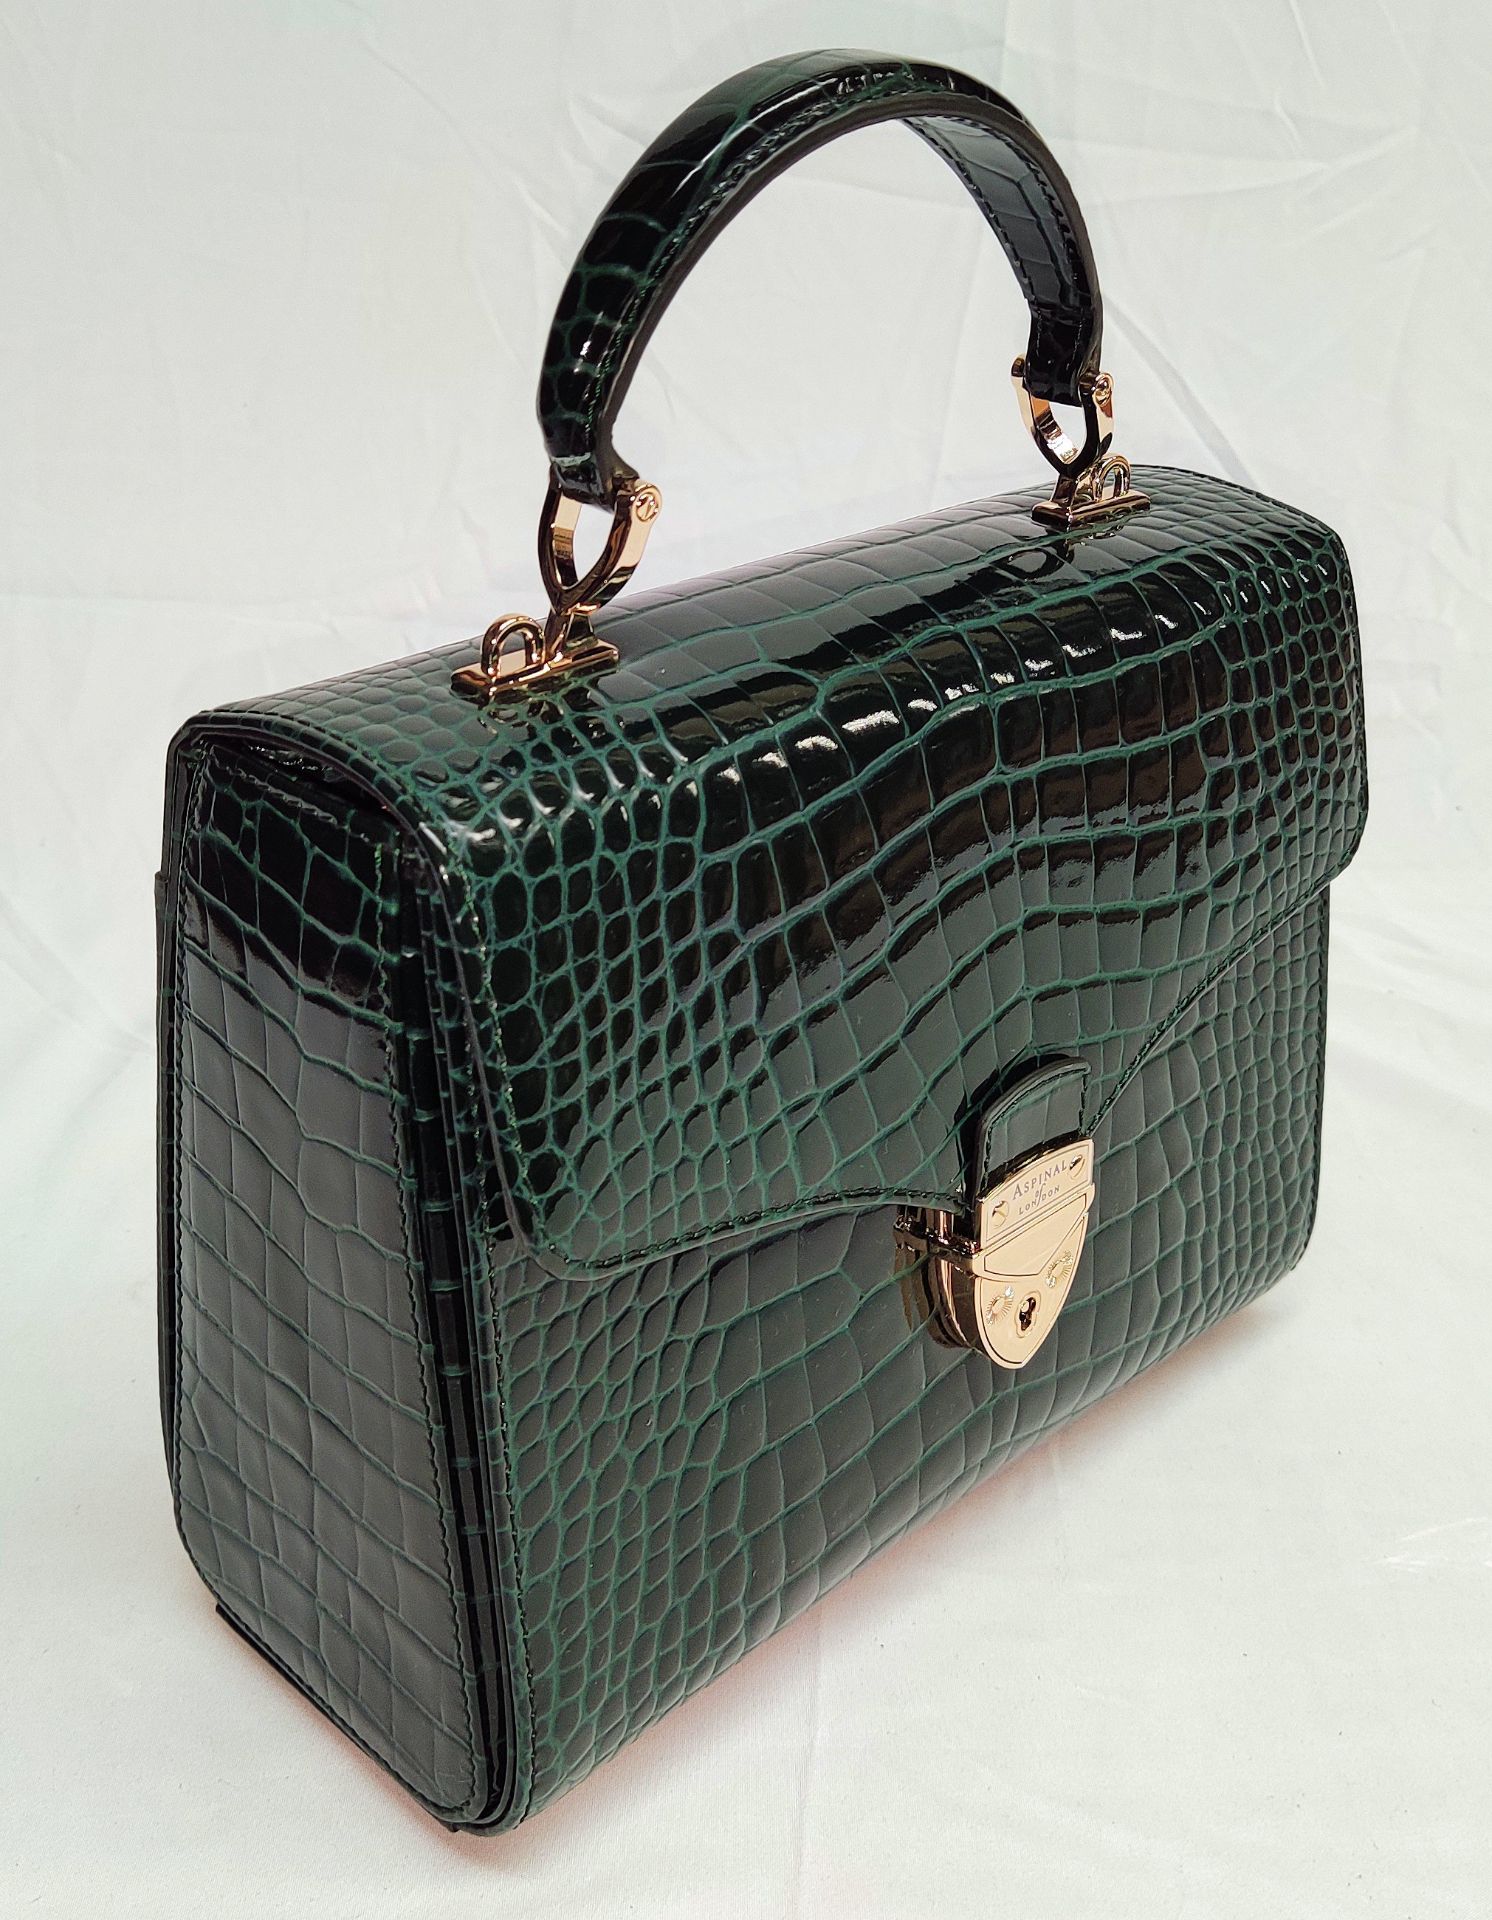 1 x ASPINAL OF LONDON Mayfair Bag - Evergreen Patent Croc - Original RRP £695.00 - Image 12 of 23